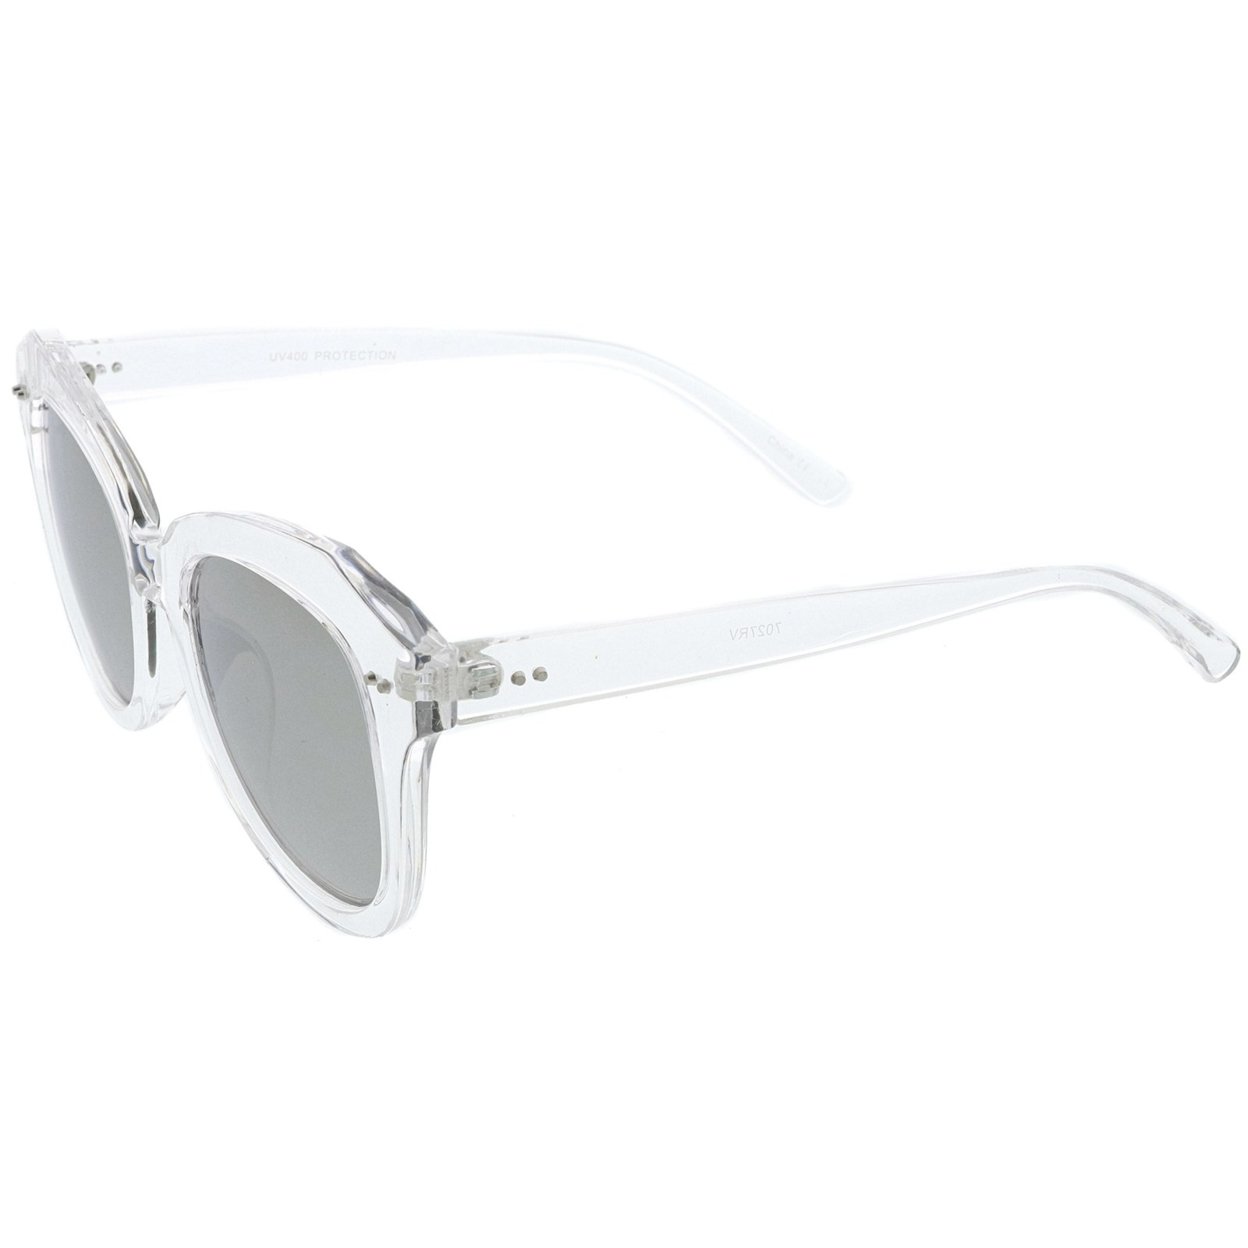 Women's Oversize Horn Rimmed Colored Mirror Round Lens Cat Eye Sunglasses 52mm - Black / Blue Mirror